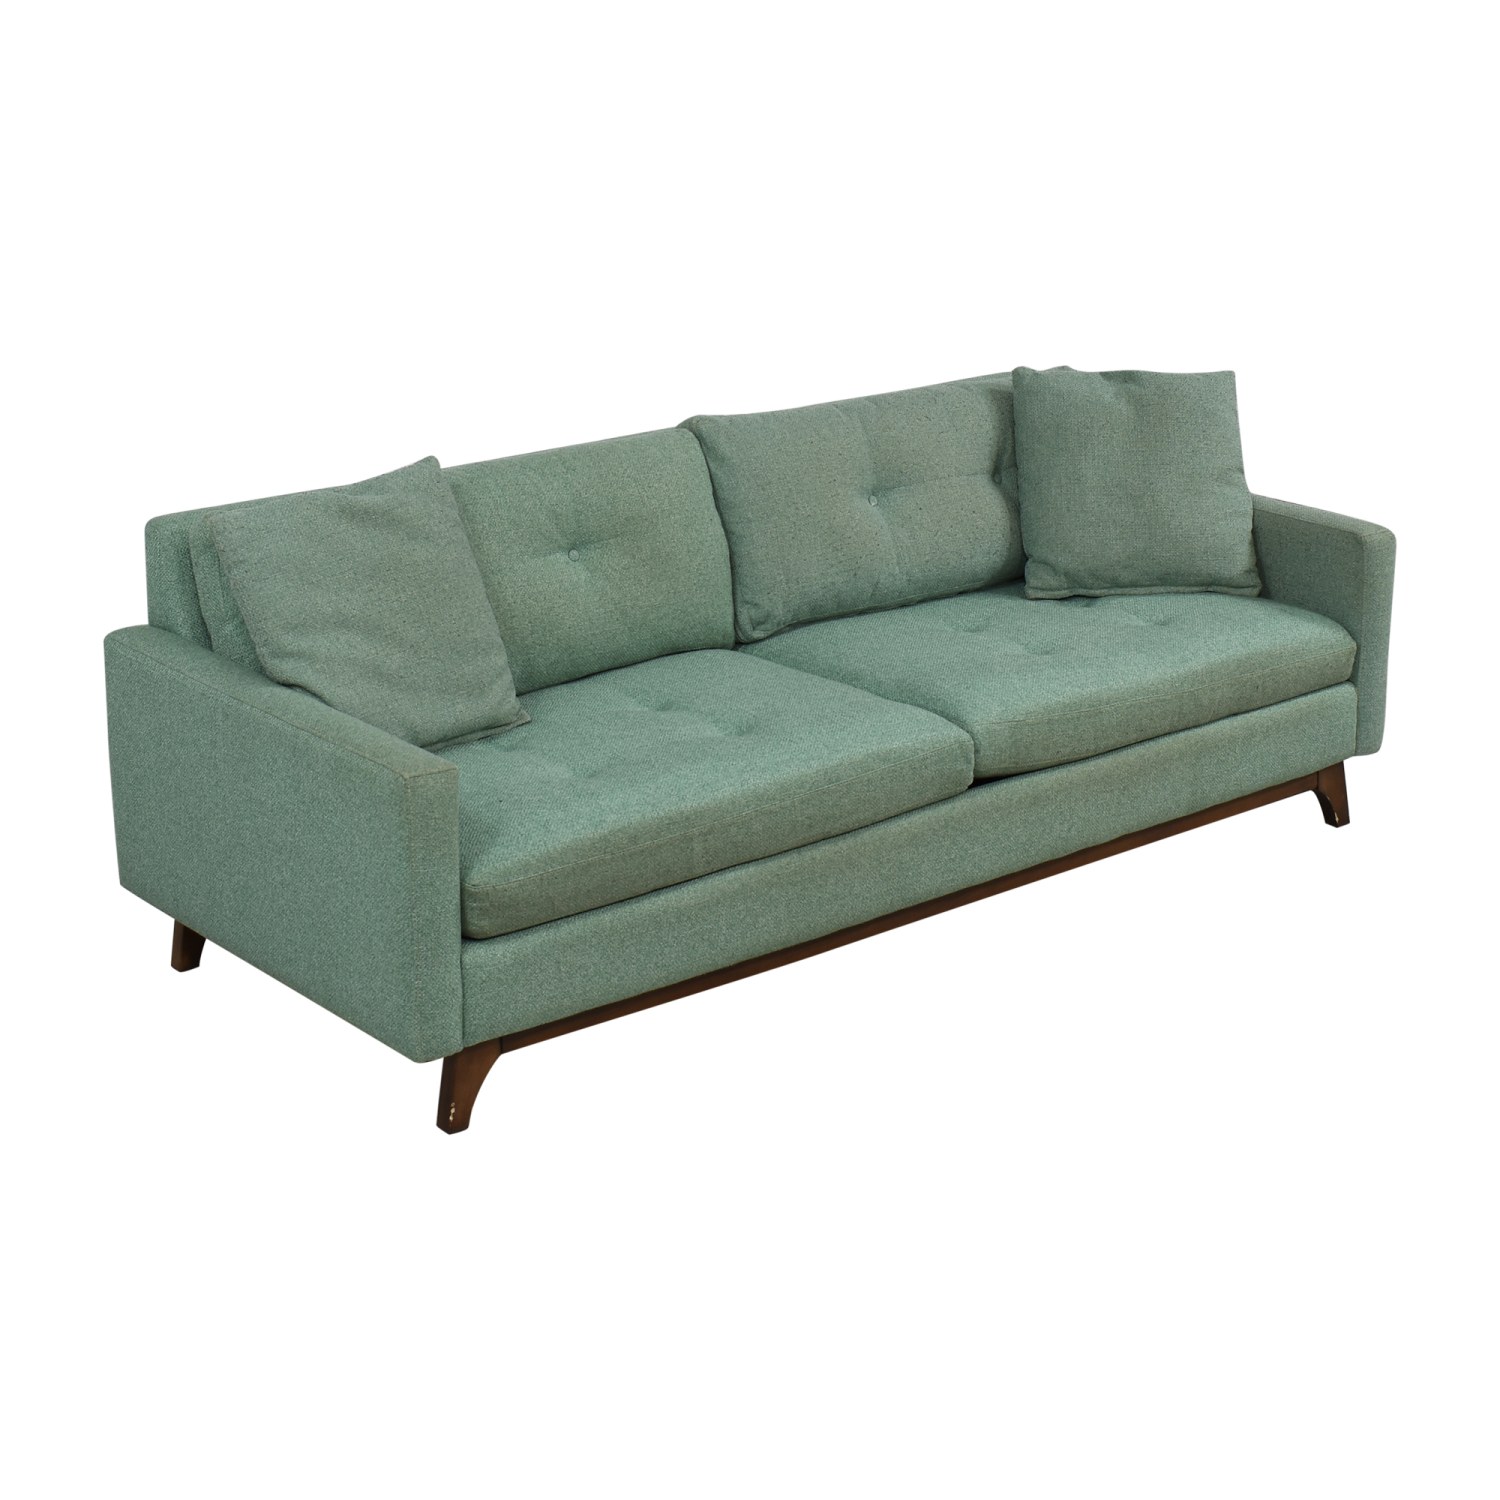 Jonathan Louis Choices - Pisces 415-30 Casual Sofa, Thornton Furniture